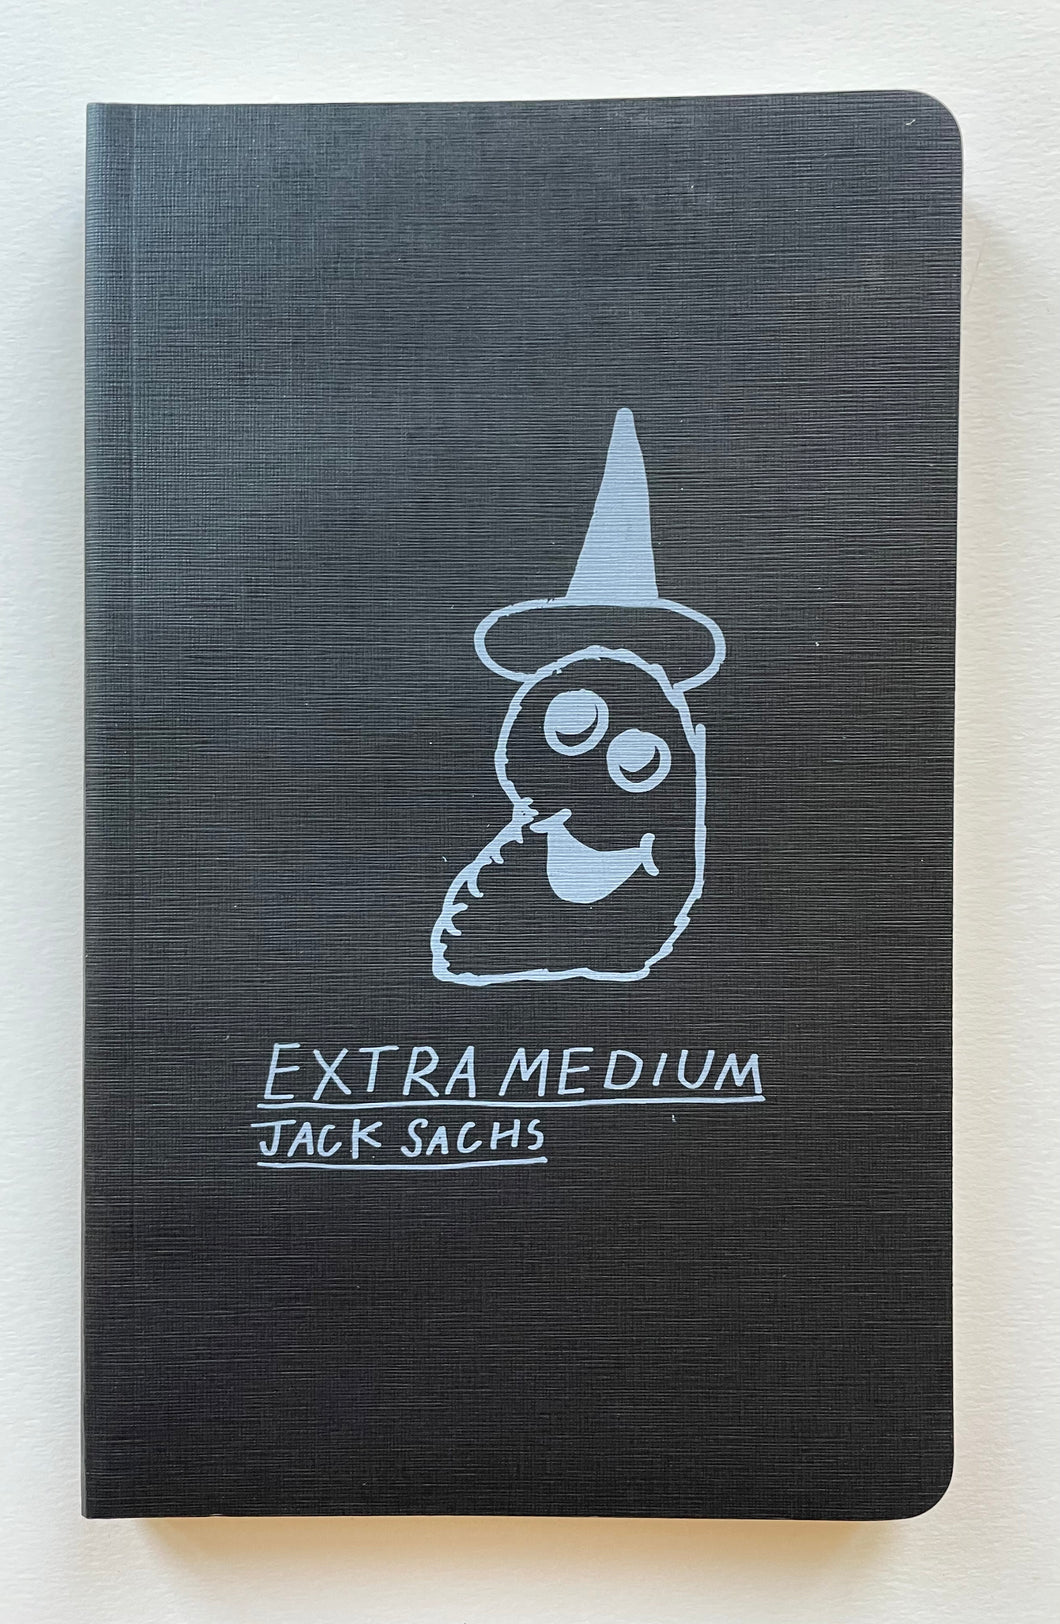 Extra Medium – Jack Sachs (Stolen books)